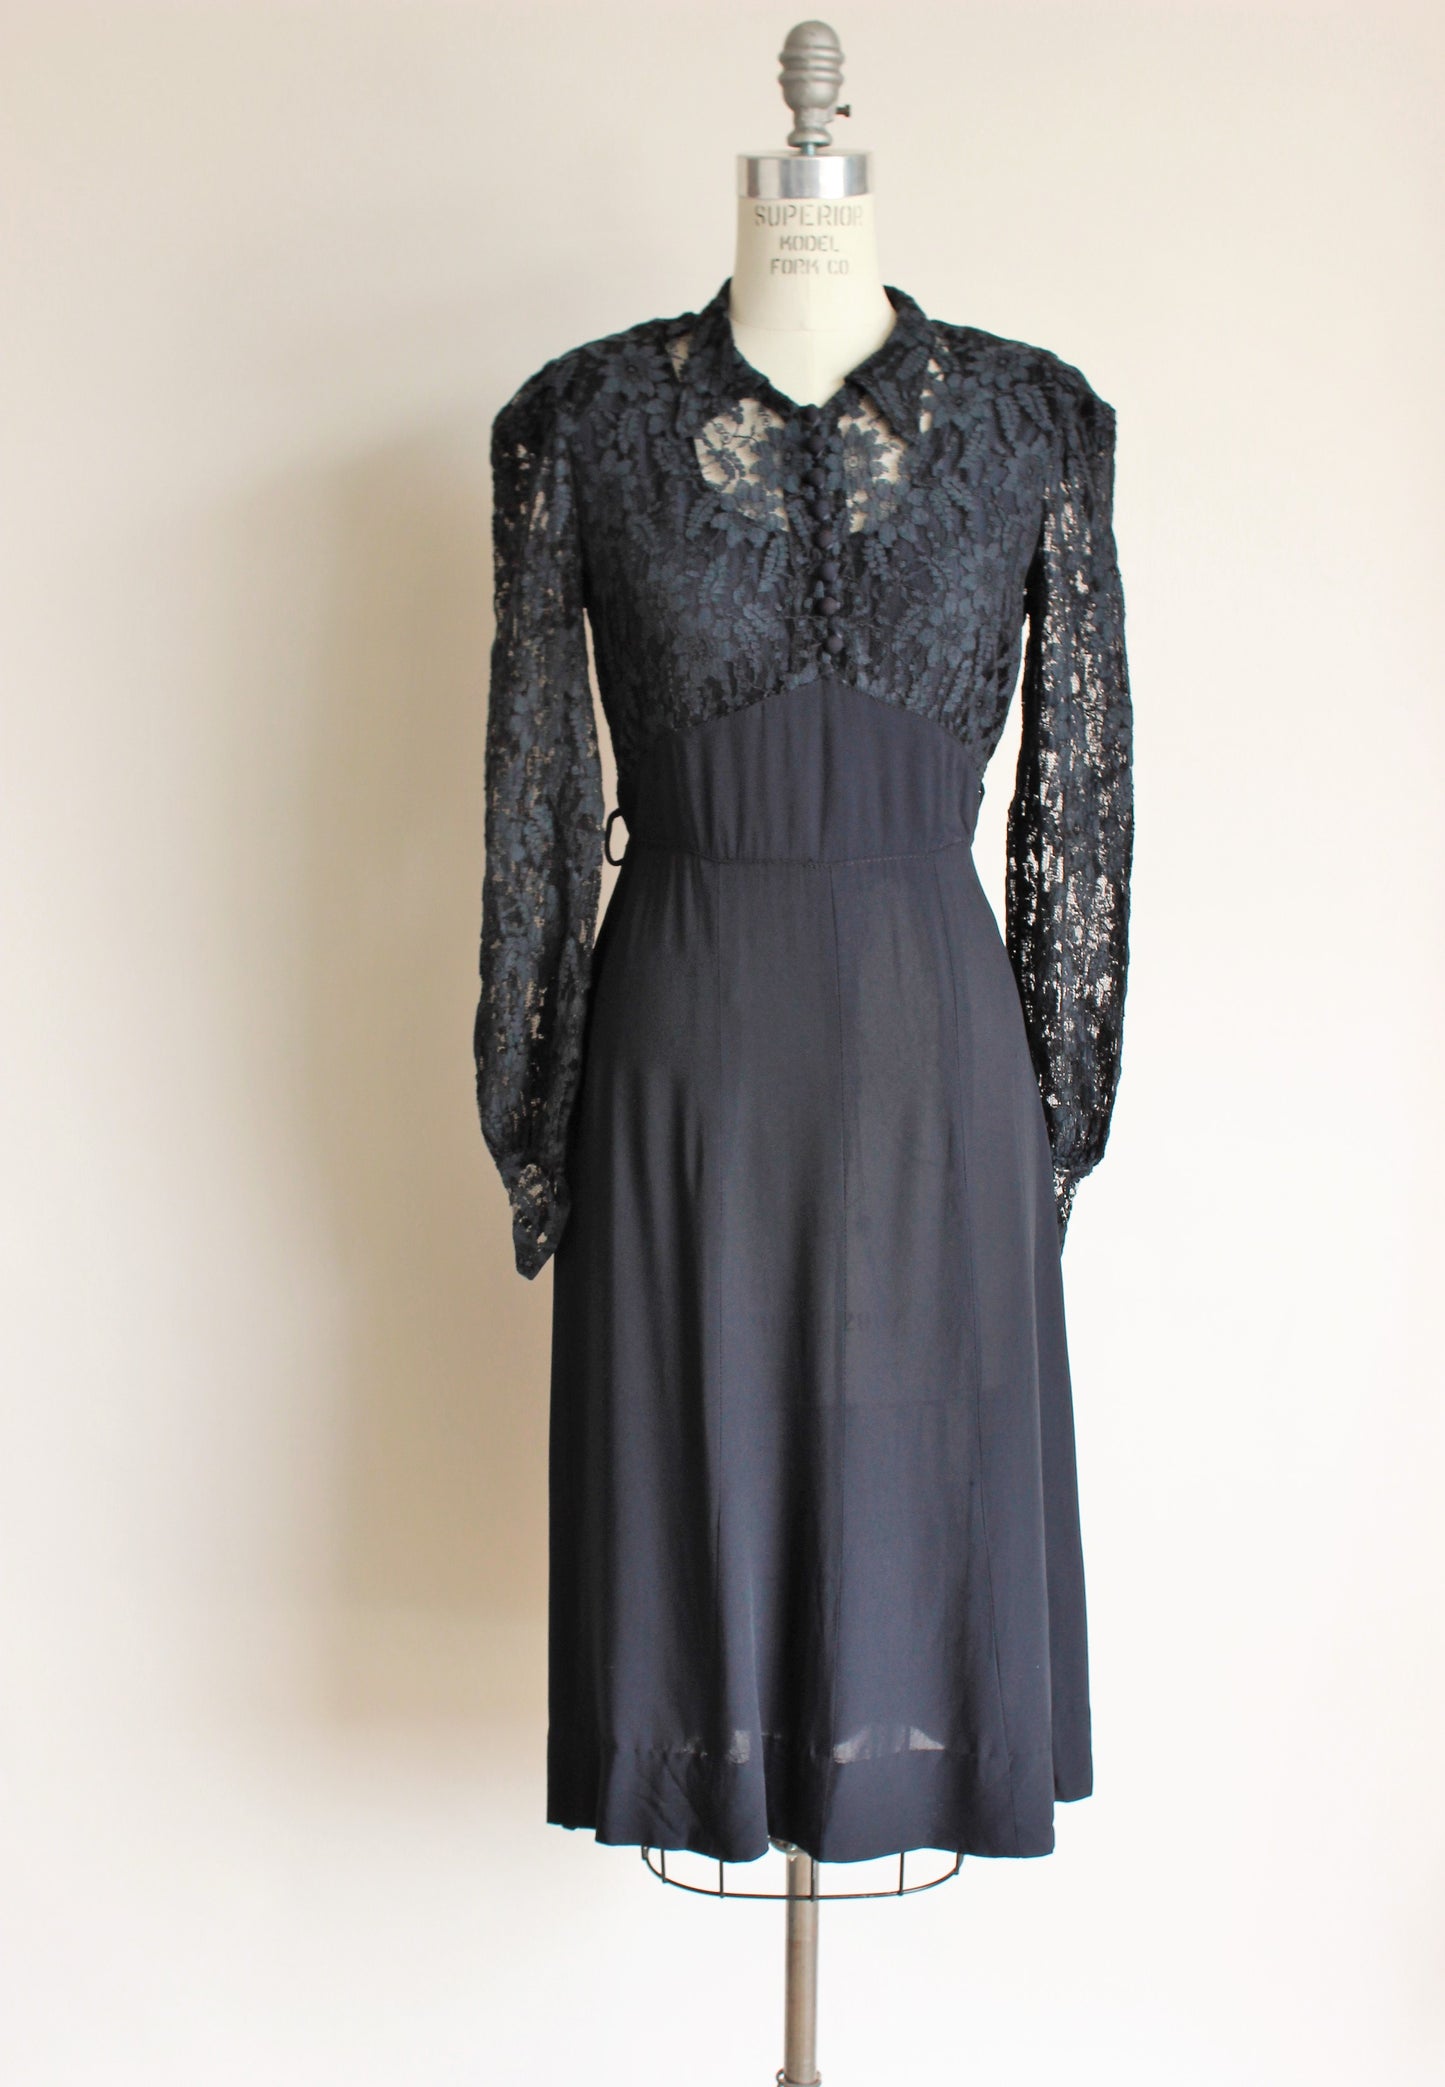 Vintage 1940s Black Rayon Dress With Lace Bodice